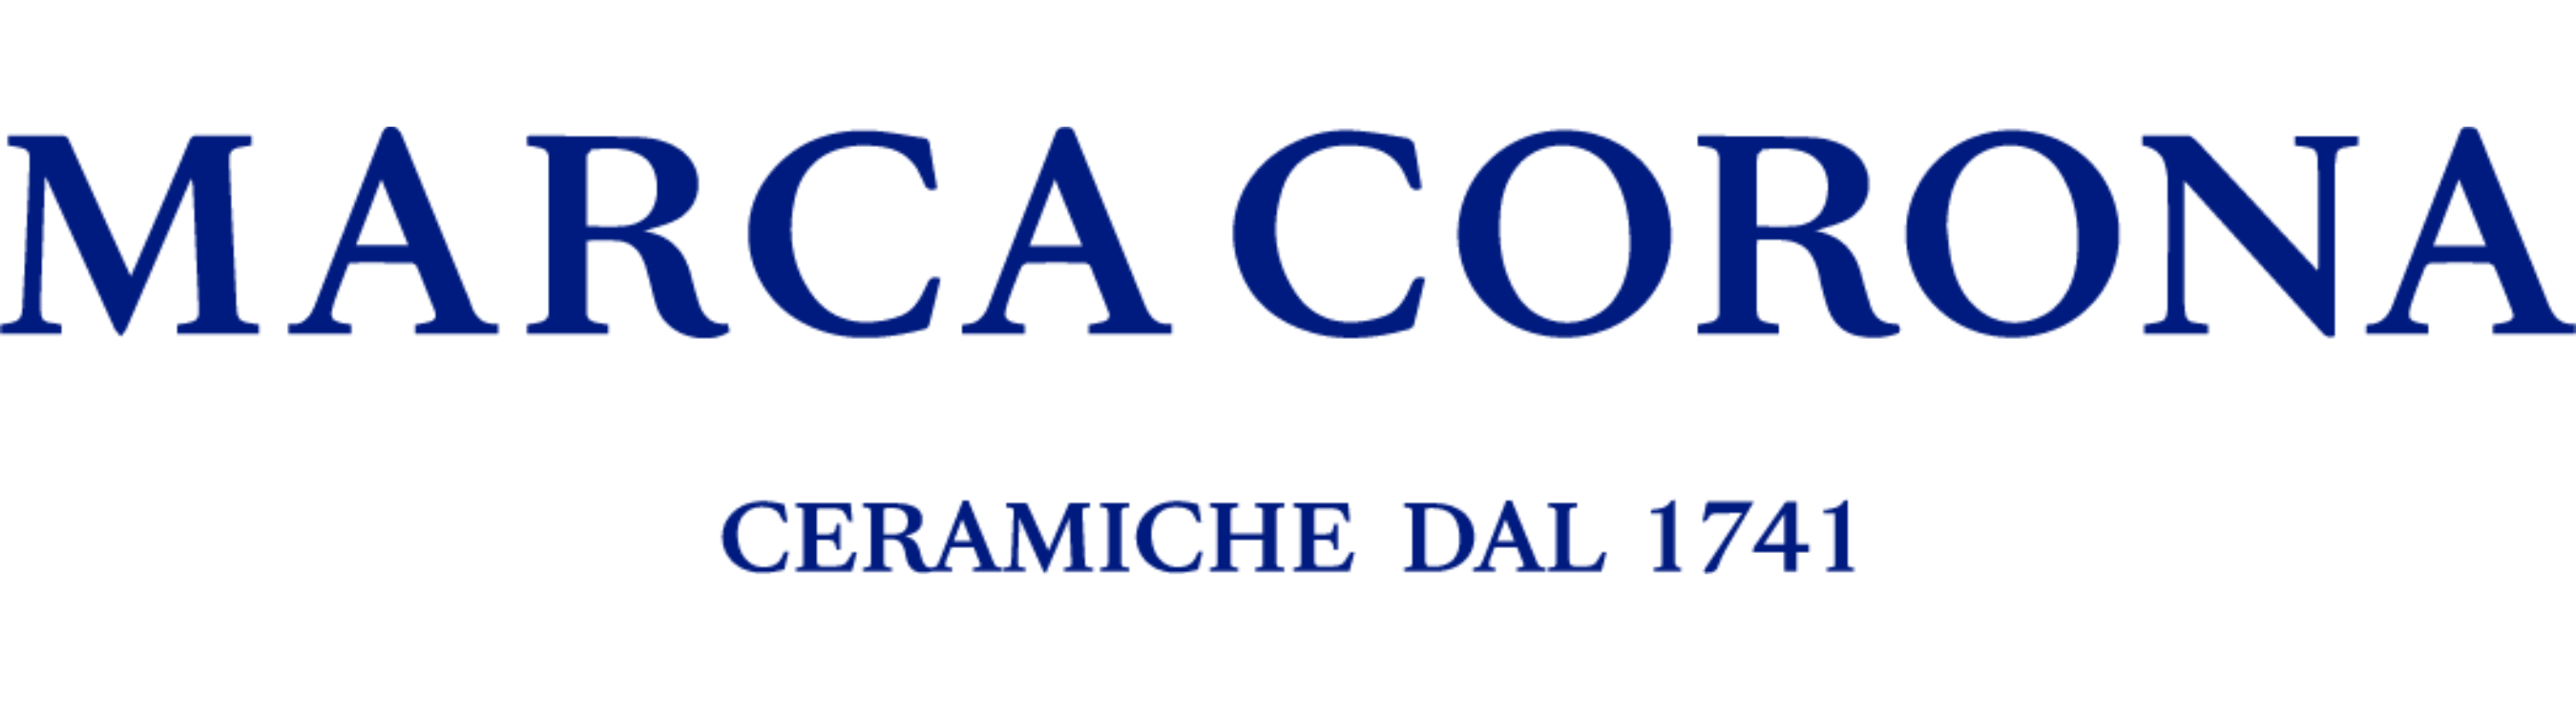 marca corona logo